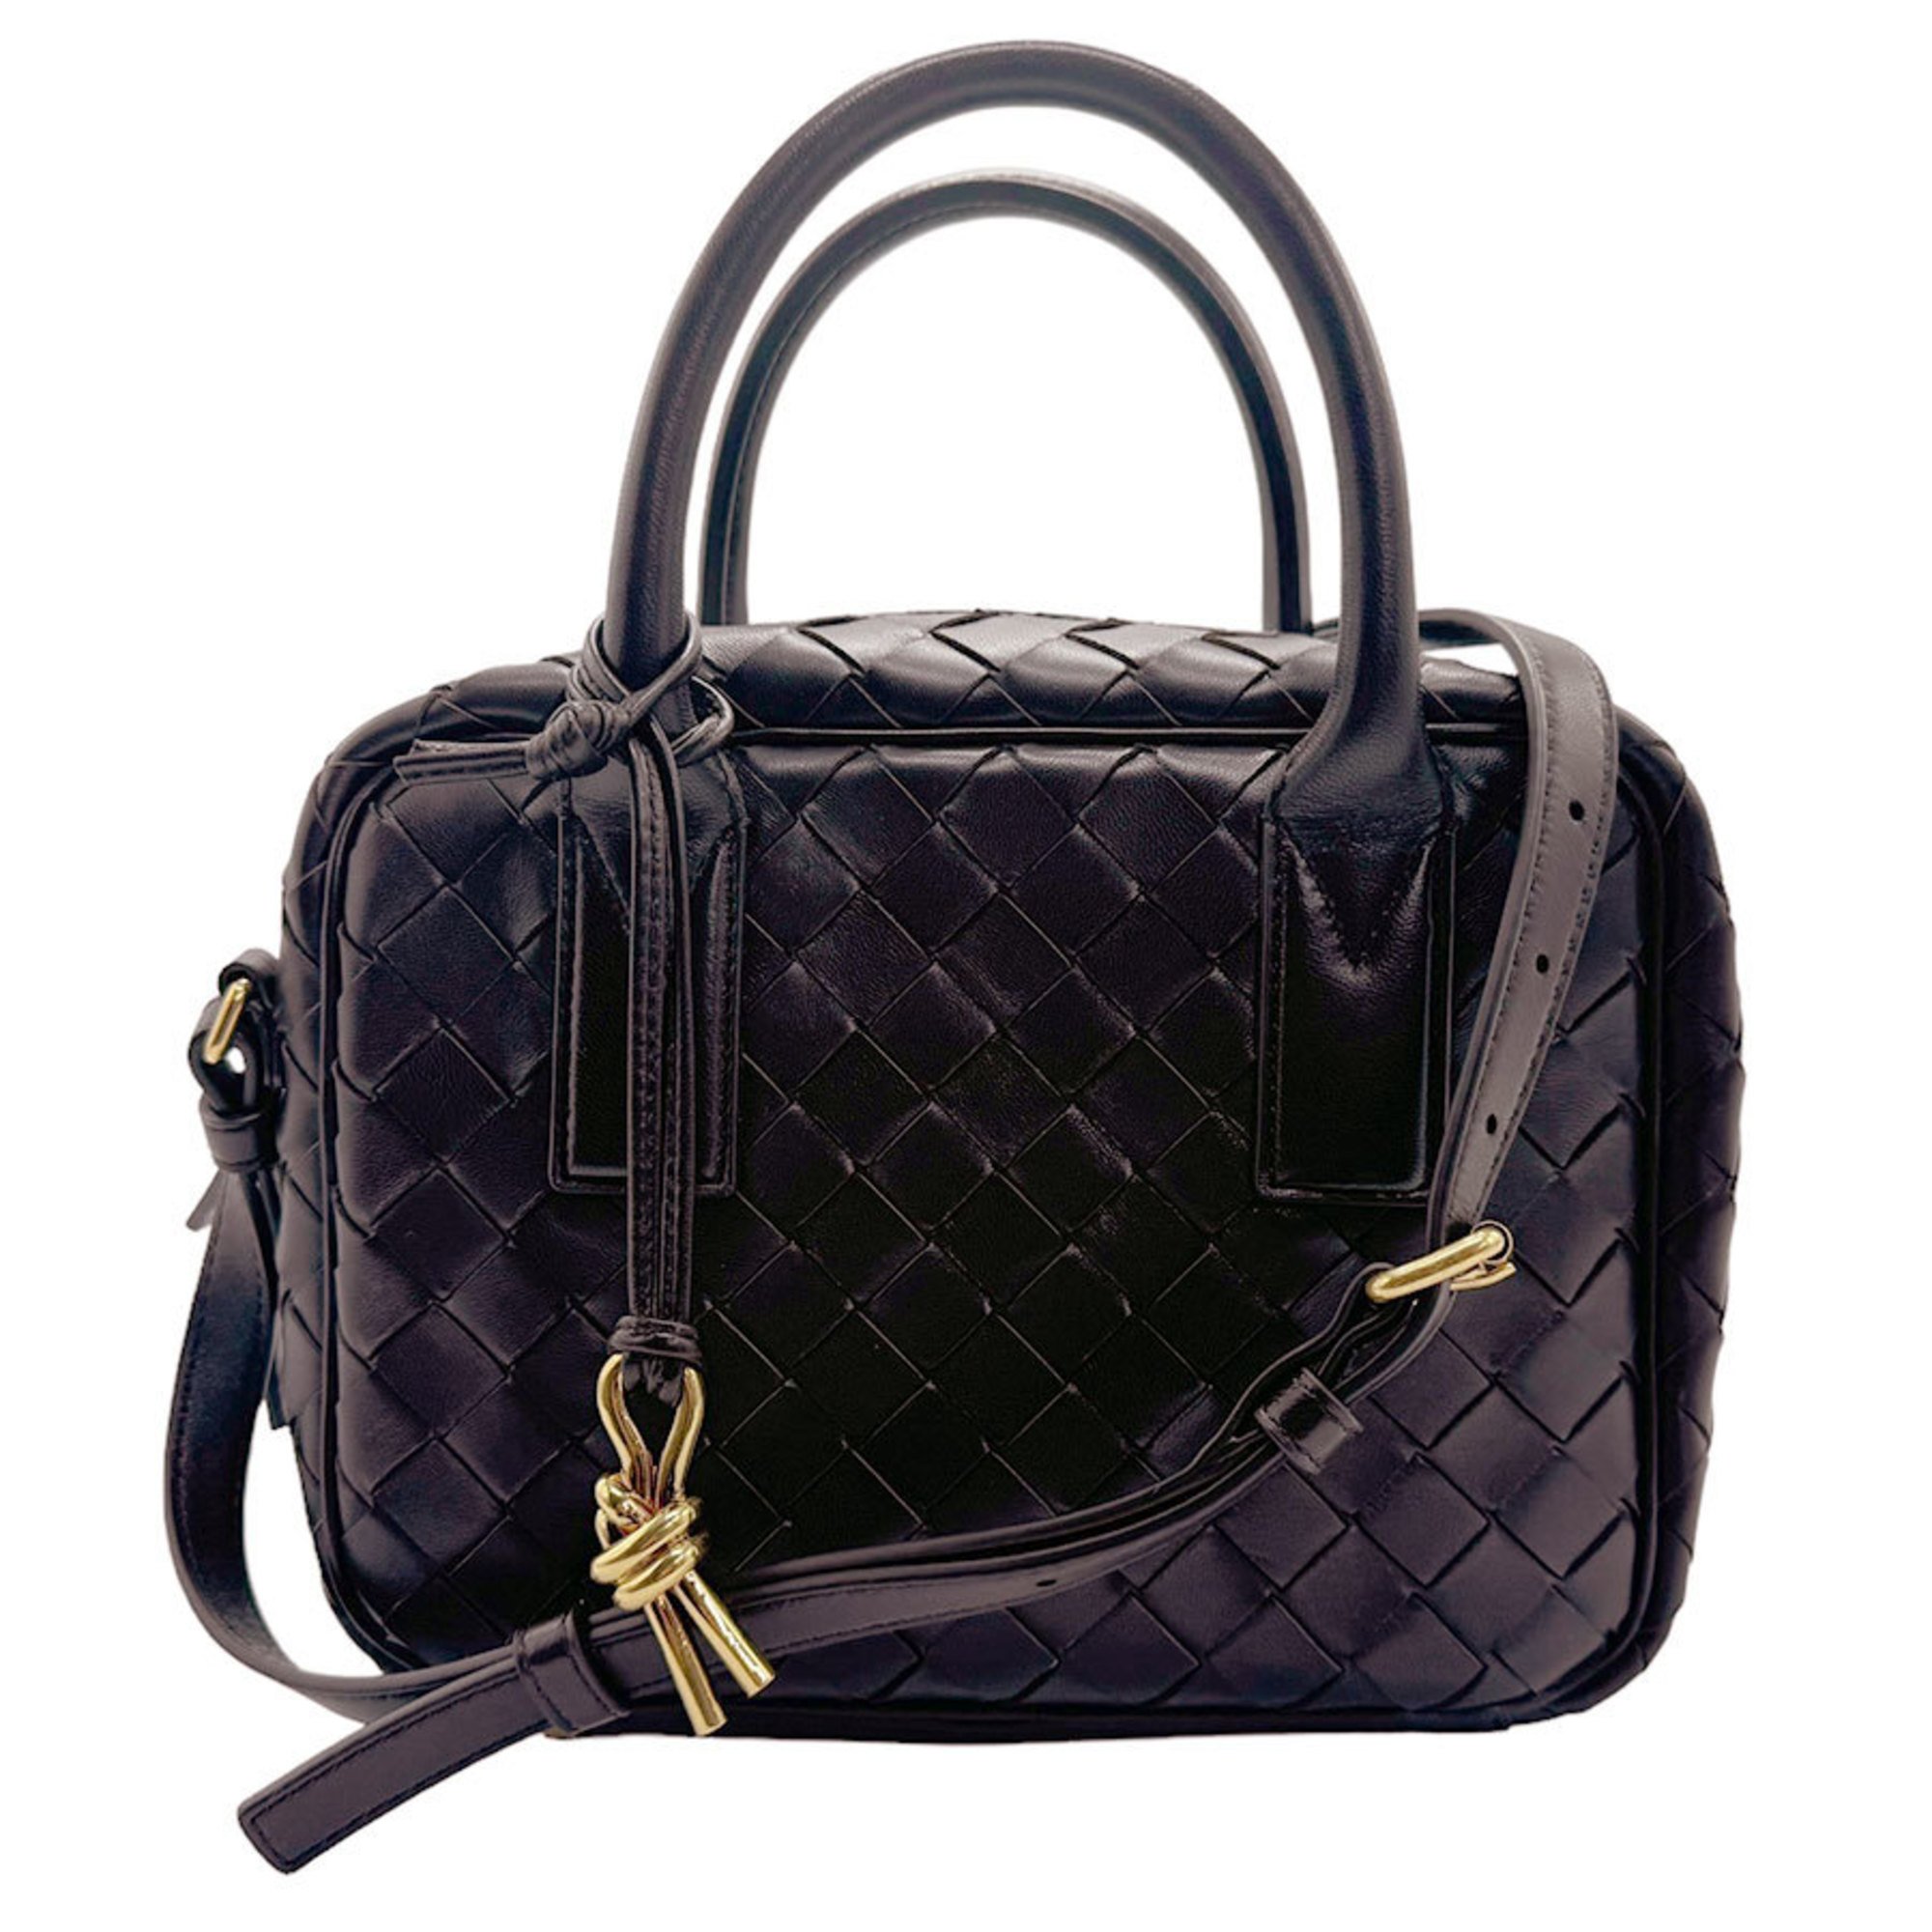 BOTTEGA VENETA Handbag Shoulder Bag Getaway Small Leather Dark Brown Gold Women's z1571